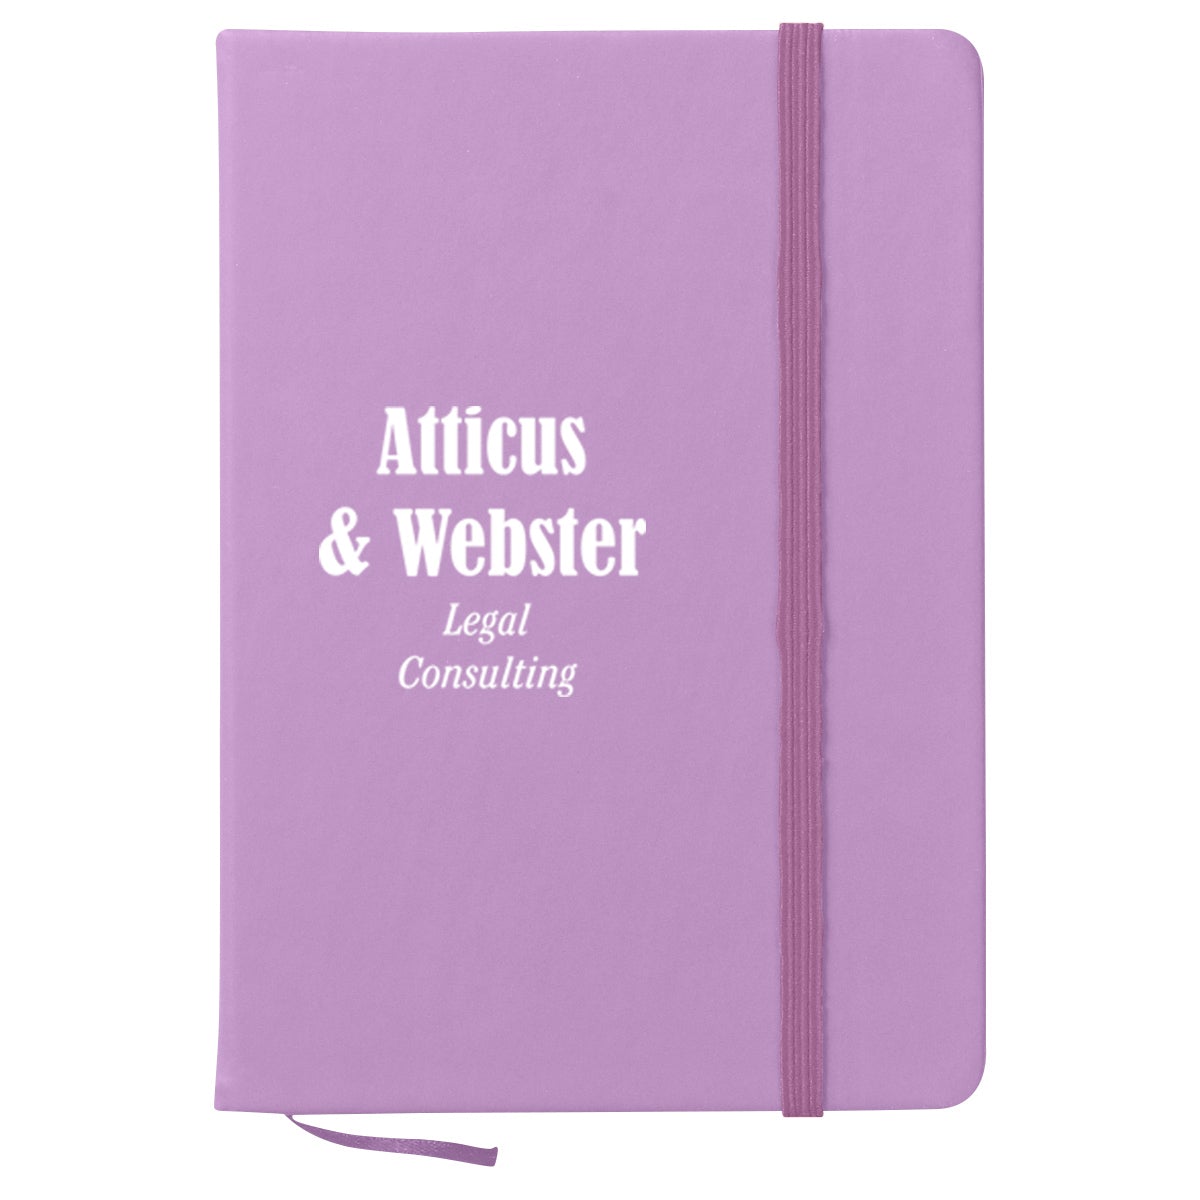 Journal Notebook Notebooks Hit Promo Purple Single Color 